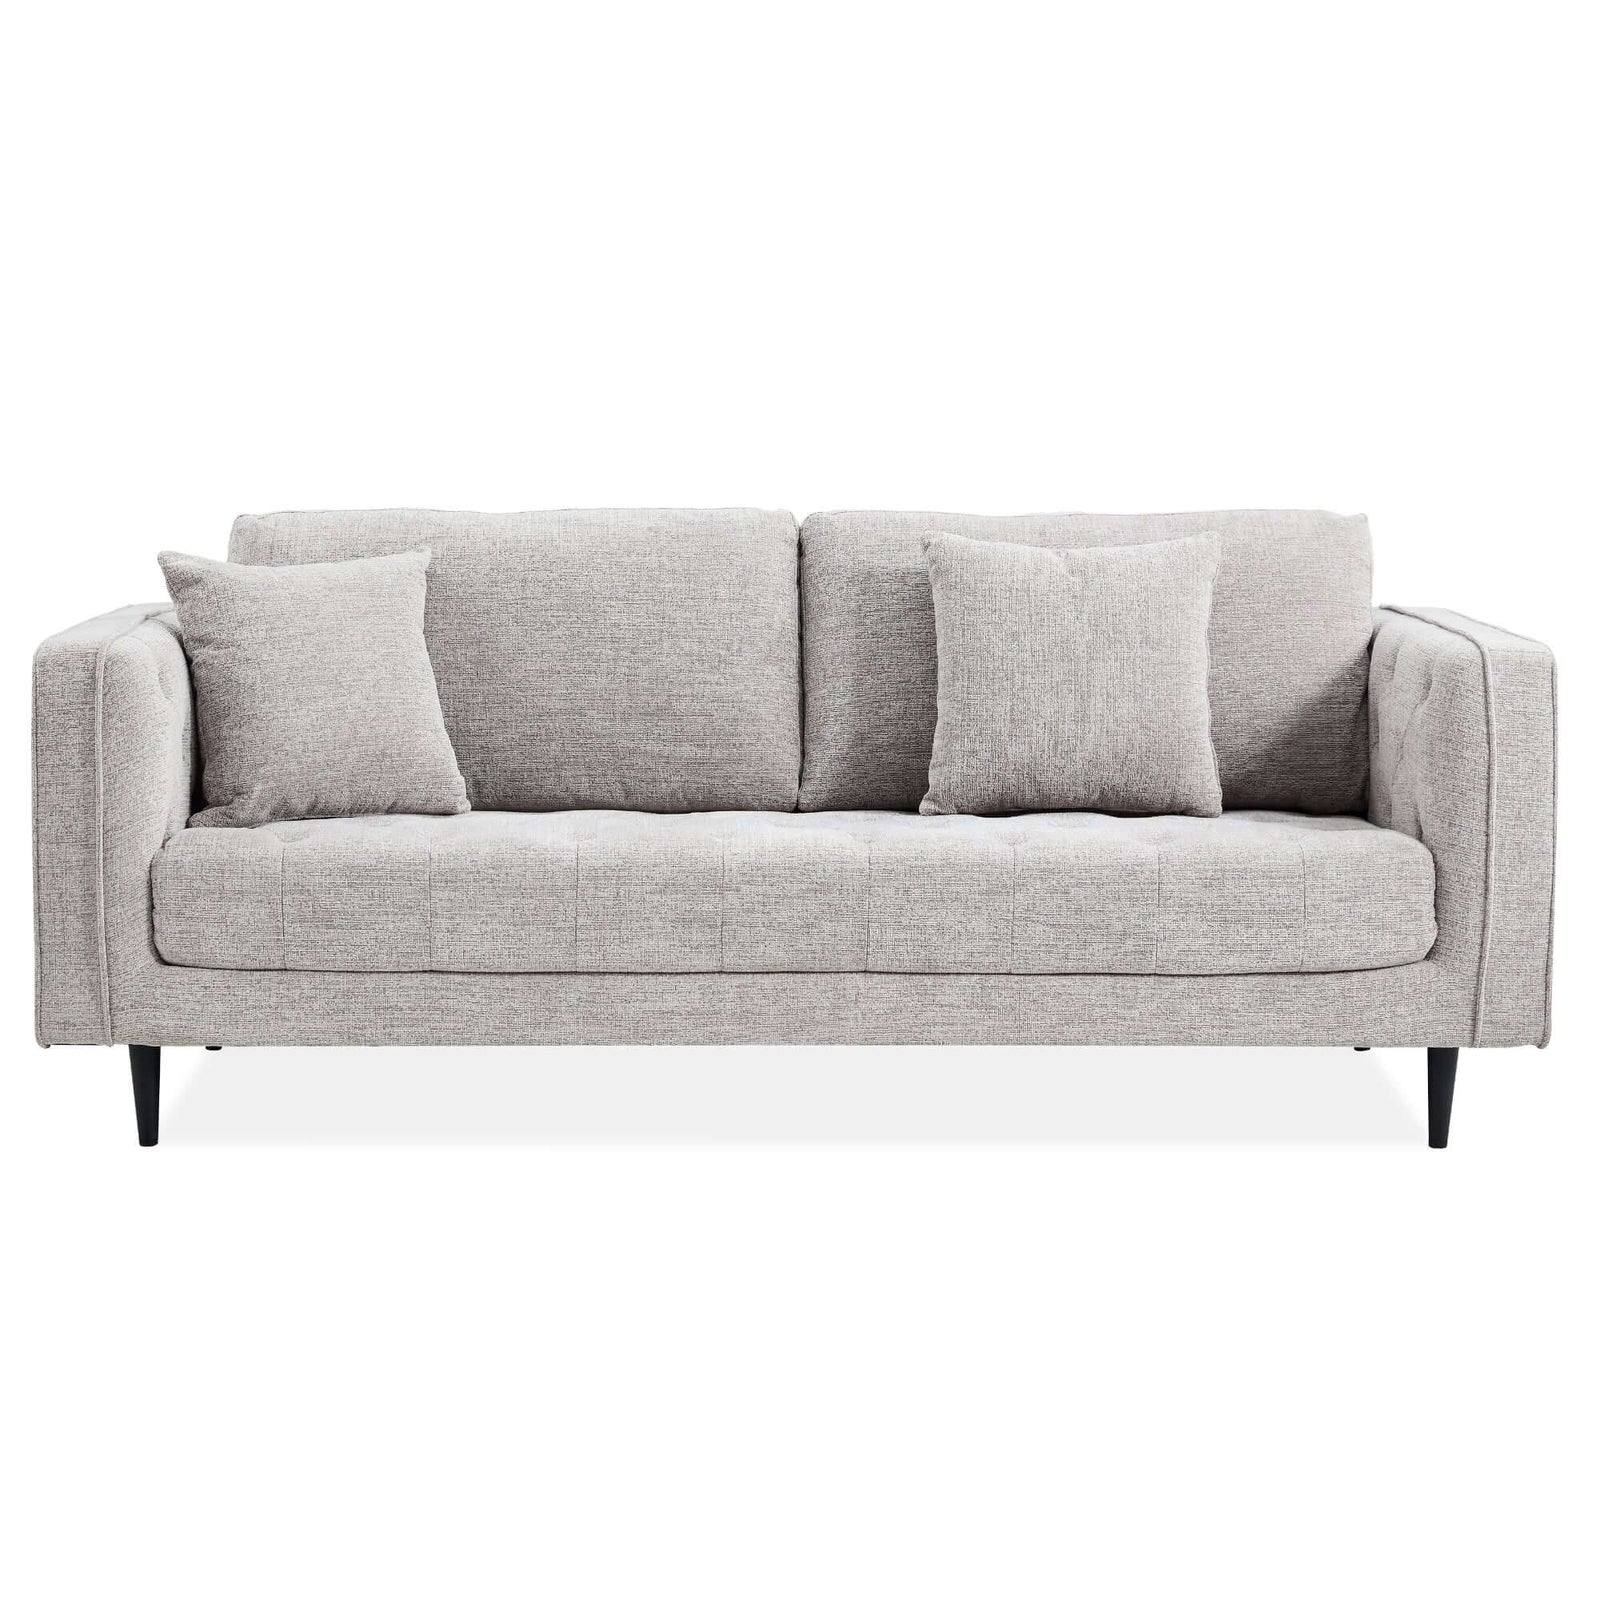 Jolie 3 Seater Sofa Fabric Uplholstered Lounge Couch - Quartz-Upinteriors